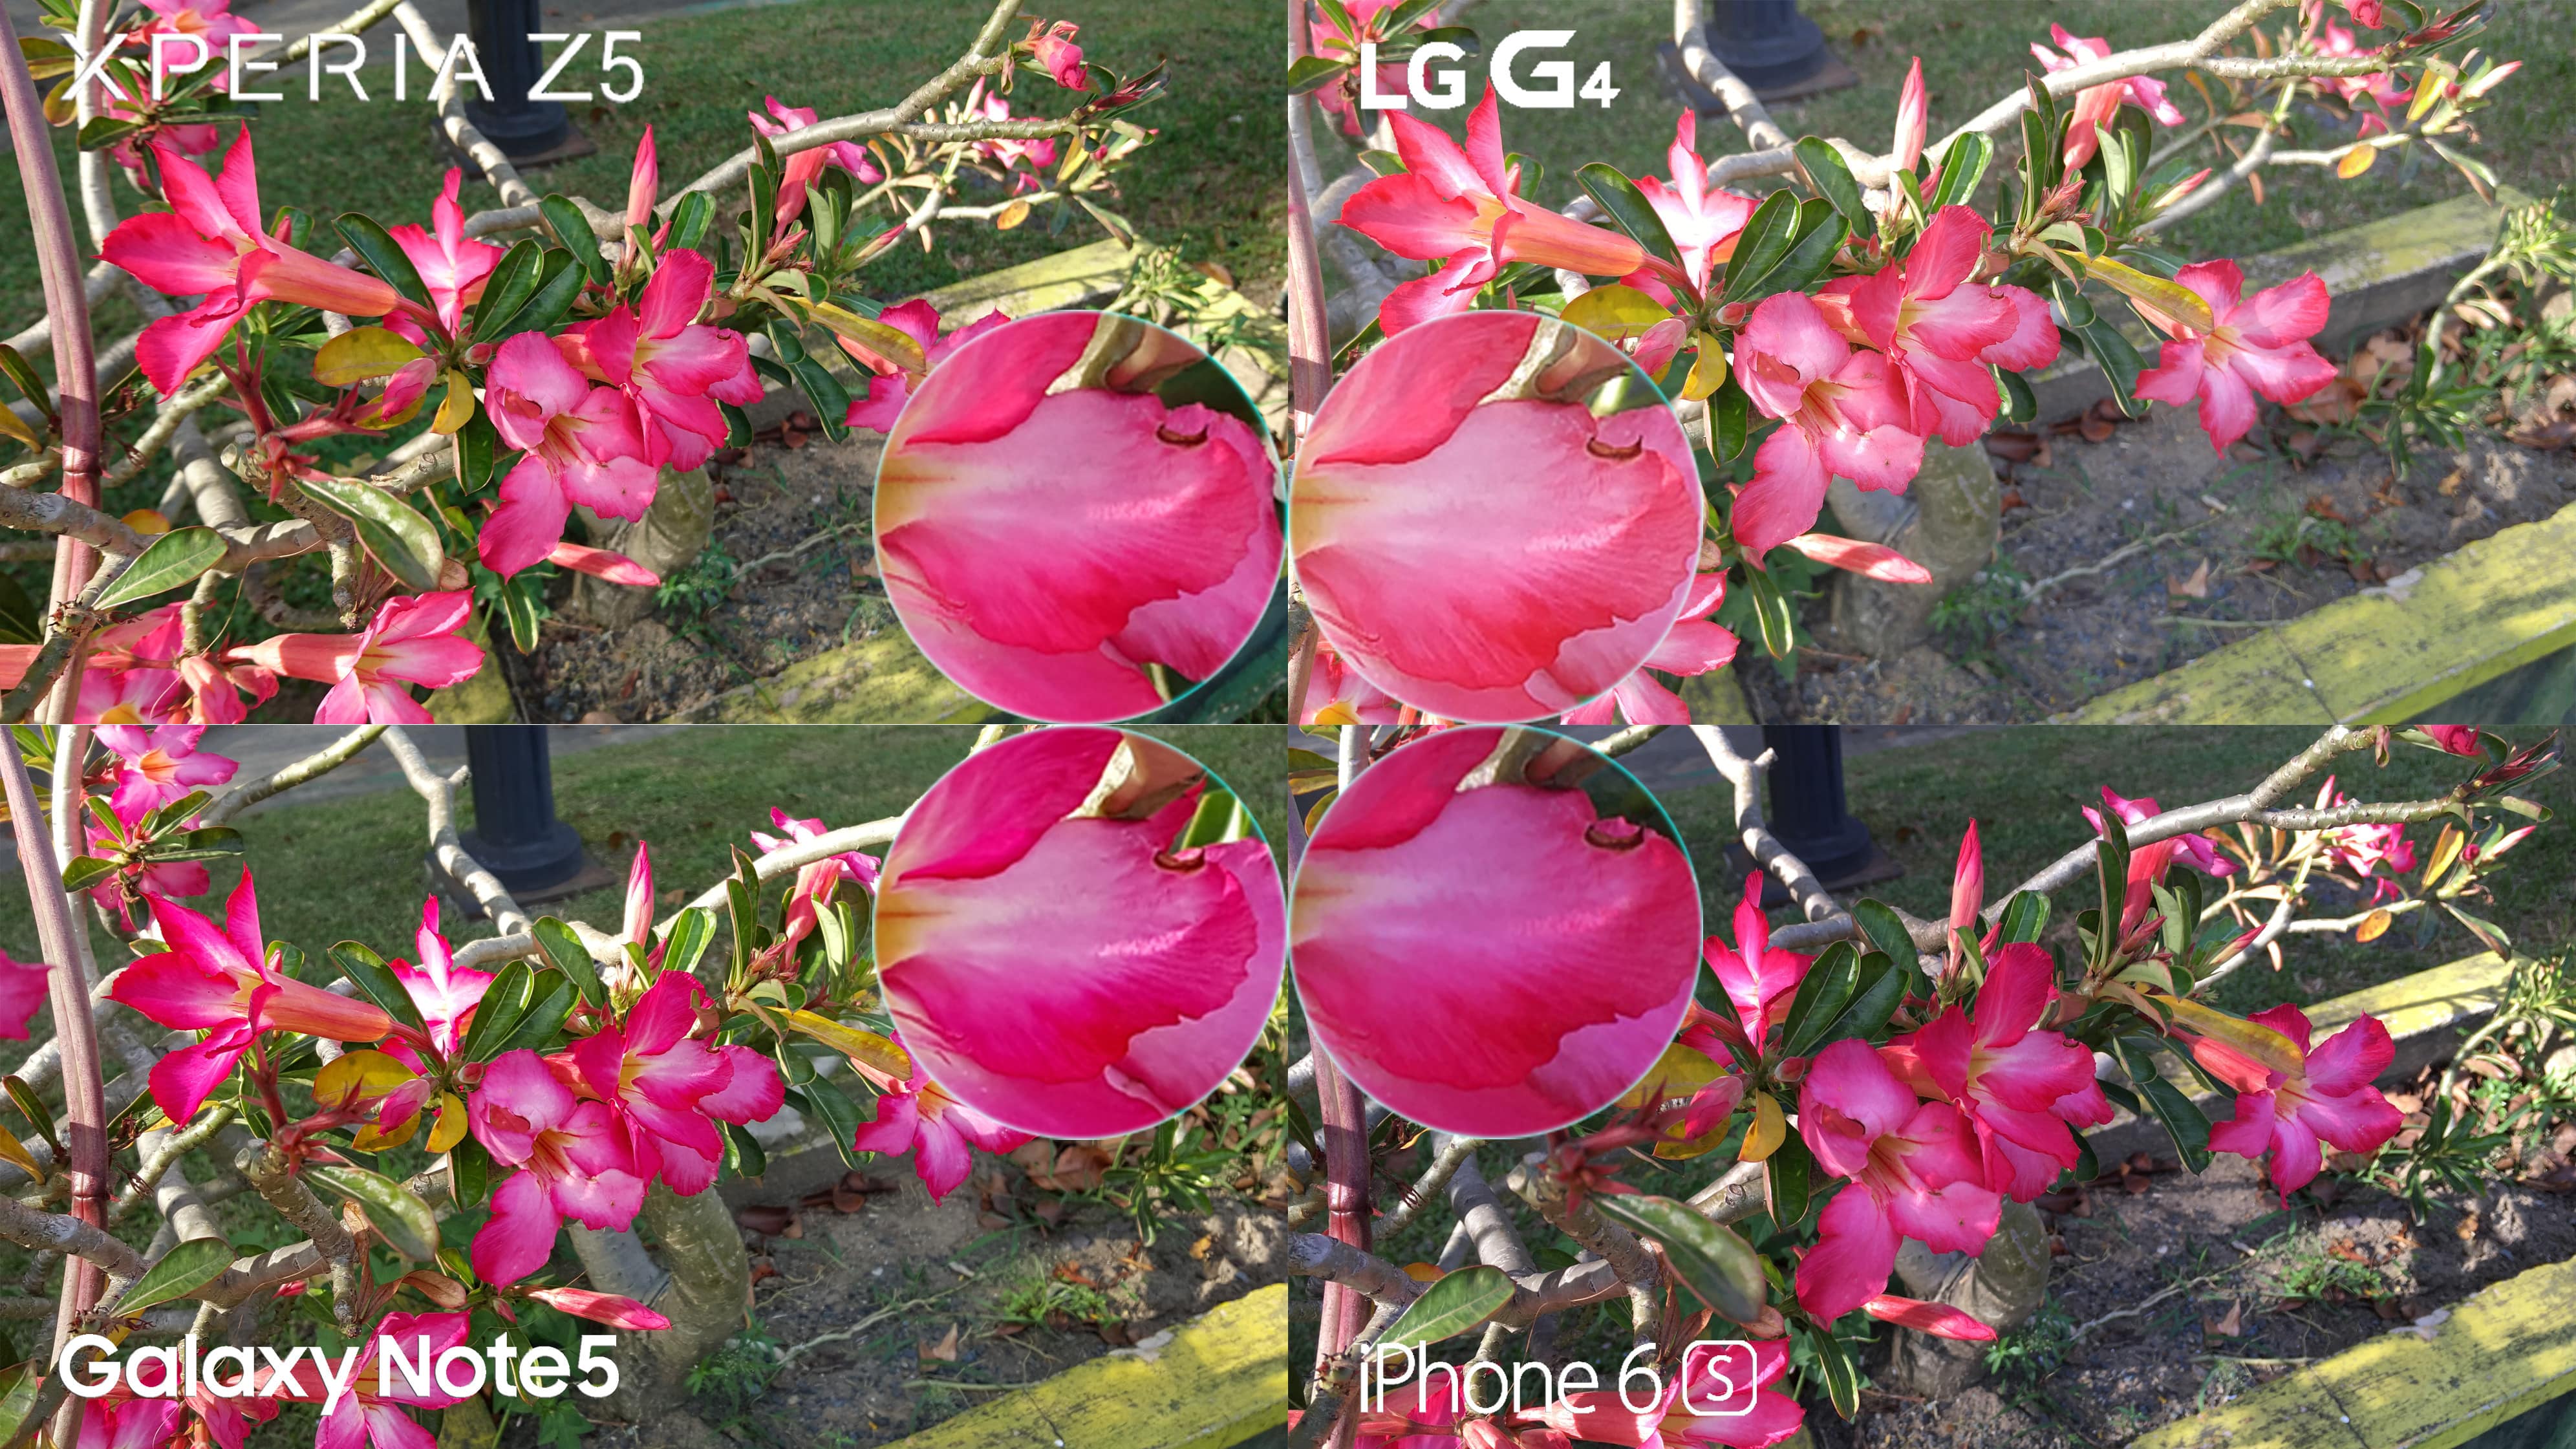 xperia-z5-lg-g4-iphone-6s-galaxy-note-5-camera-review-comparison5-min